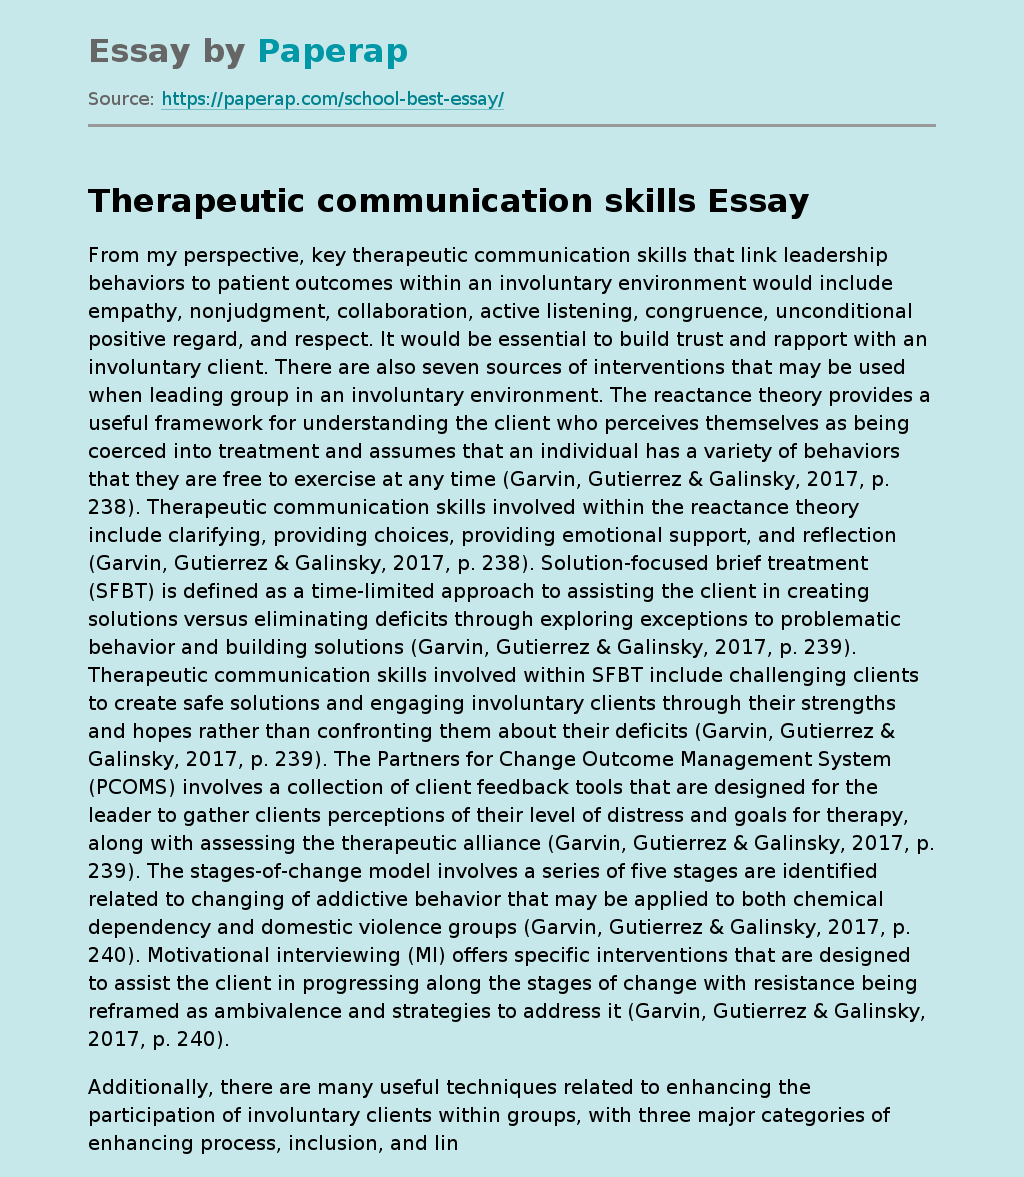 The Therapeutic Communication Skills